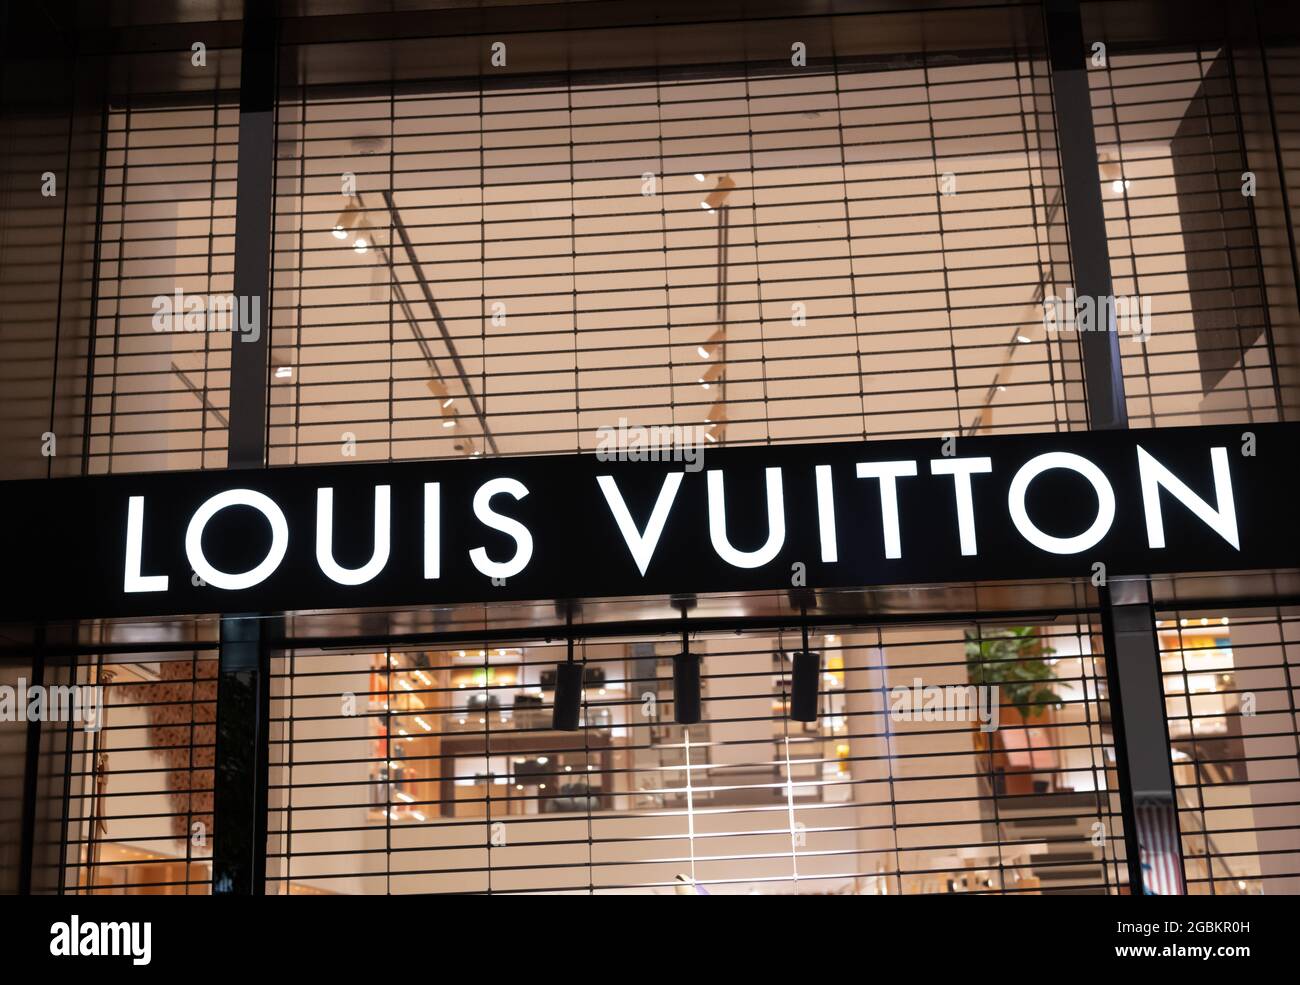 Miami, USA - March 20, 2021: Louis Vuitton name lit up on shop